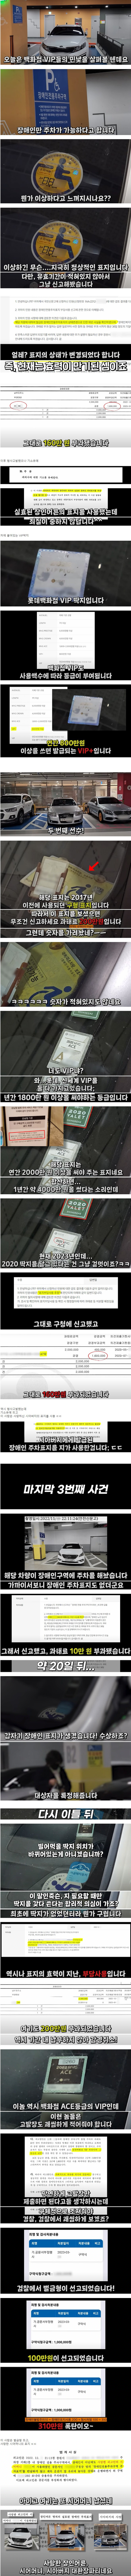 nokbeon.net-백화점 VIP들 털어버린 딸배헌터-1번 이미지